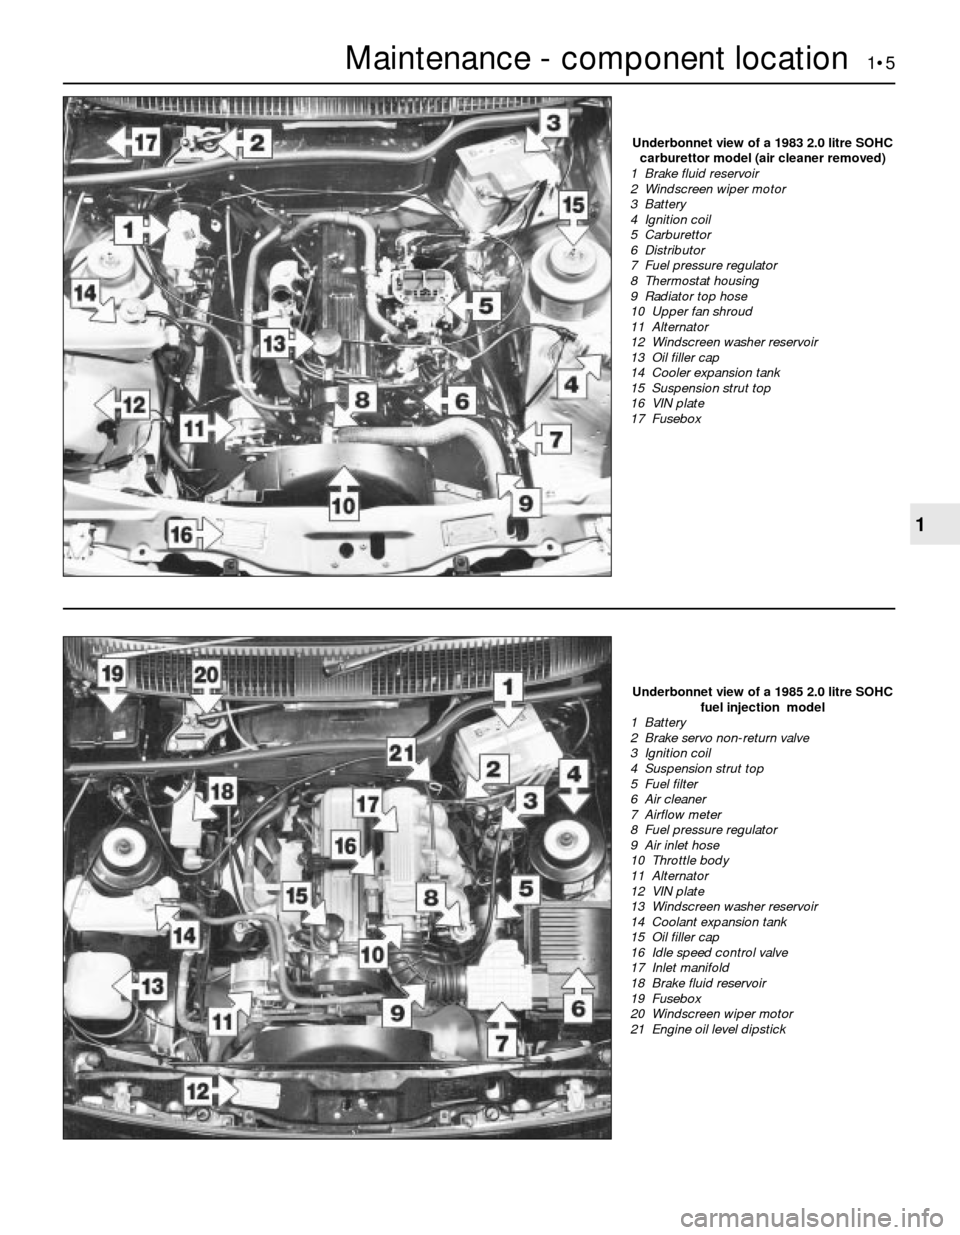 FORD SIERRA 1986 1.G Routine Manintenance And Servicing Workshop Manual Maintenance - component location  1•5
1
Underbonnet view of a 1985 2.0 litre SOHC
fuel injection  model
1  Battery
2  Brake servo non-return valve
3  Ignition coil
4  Suspension strut top
5  Fuel fi